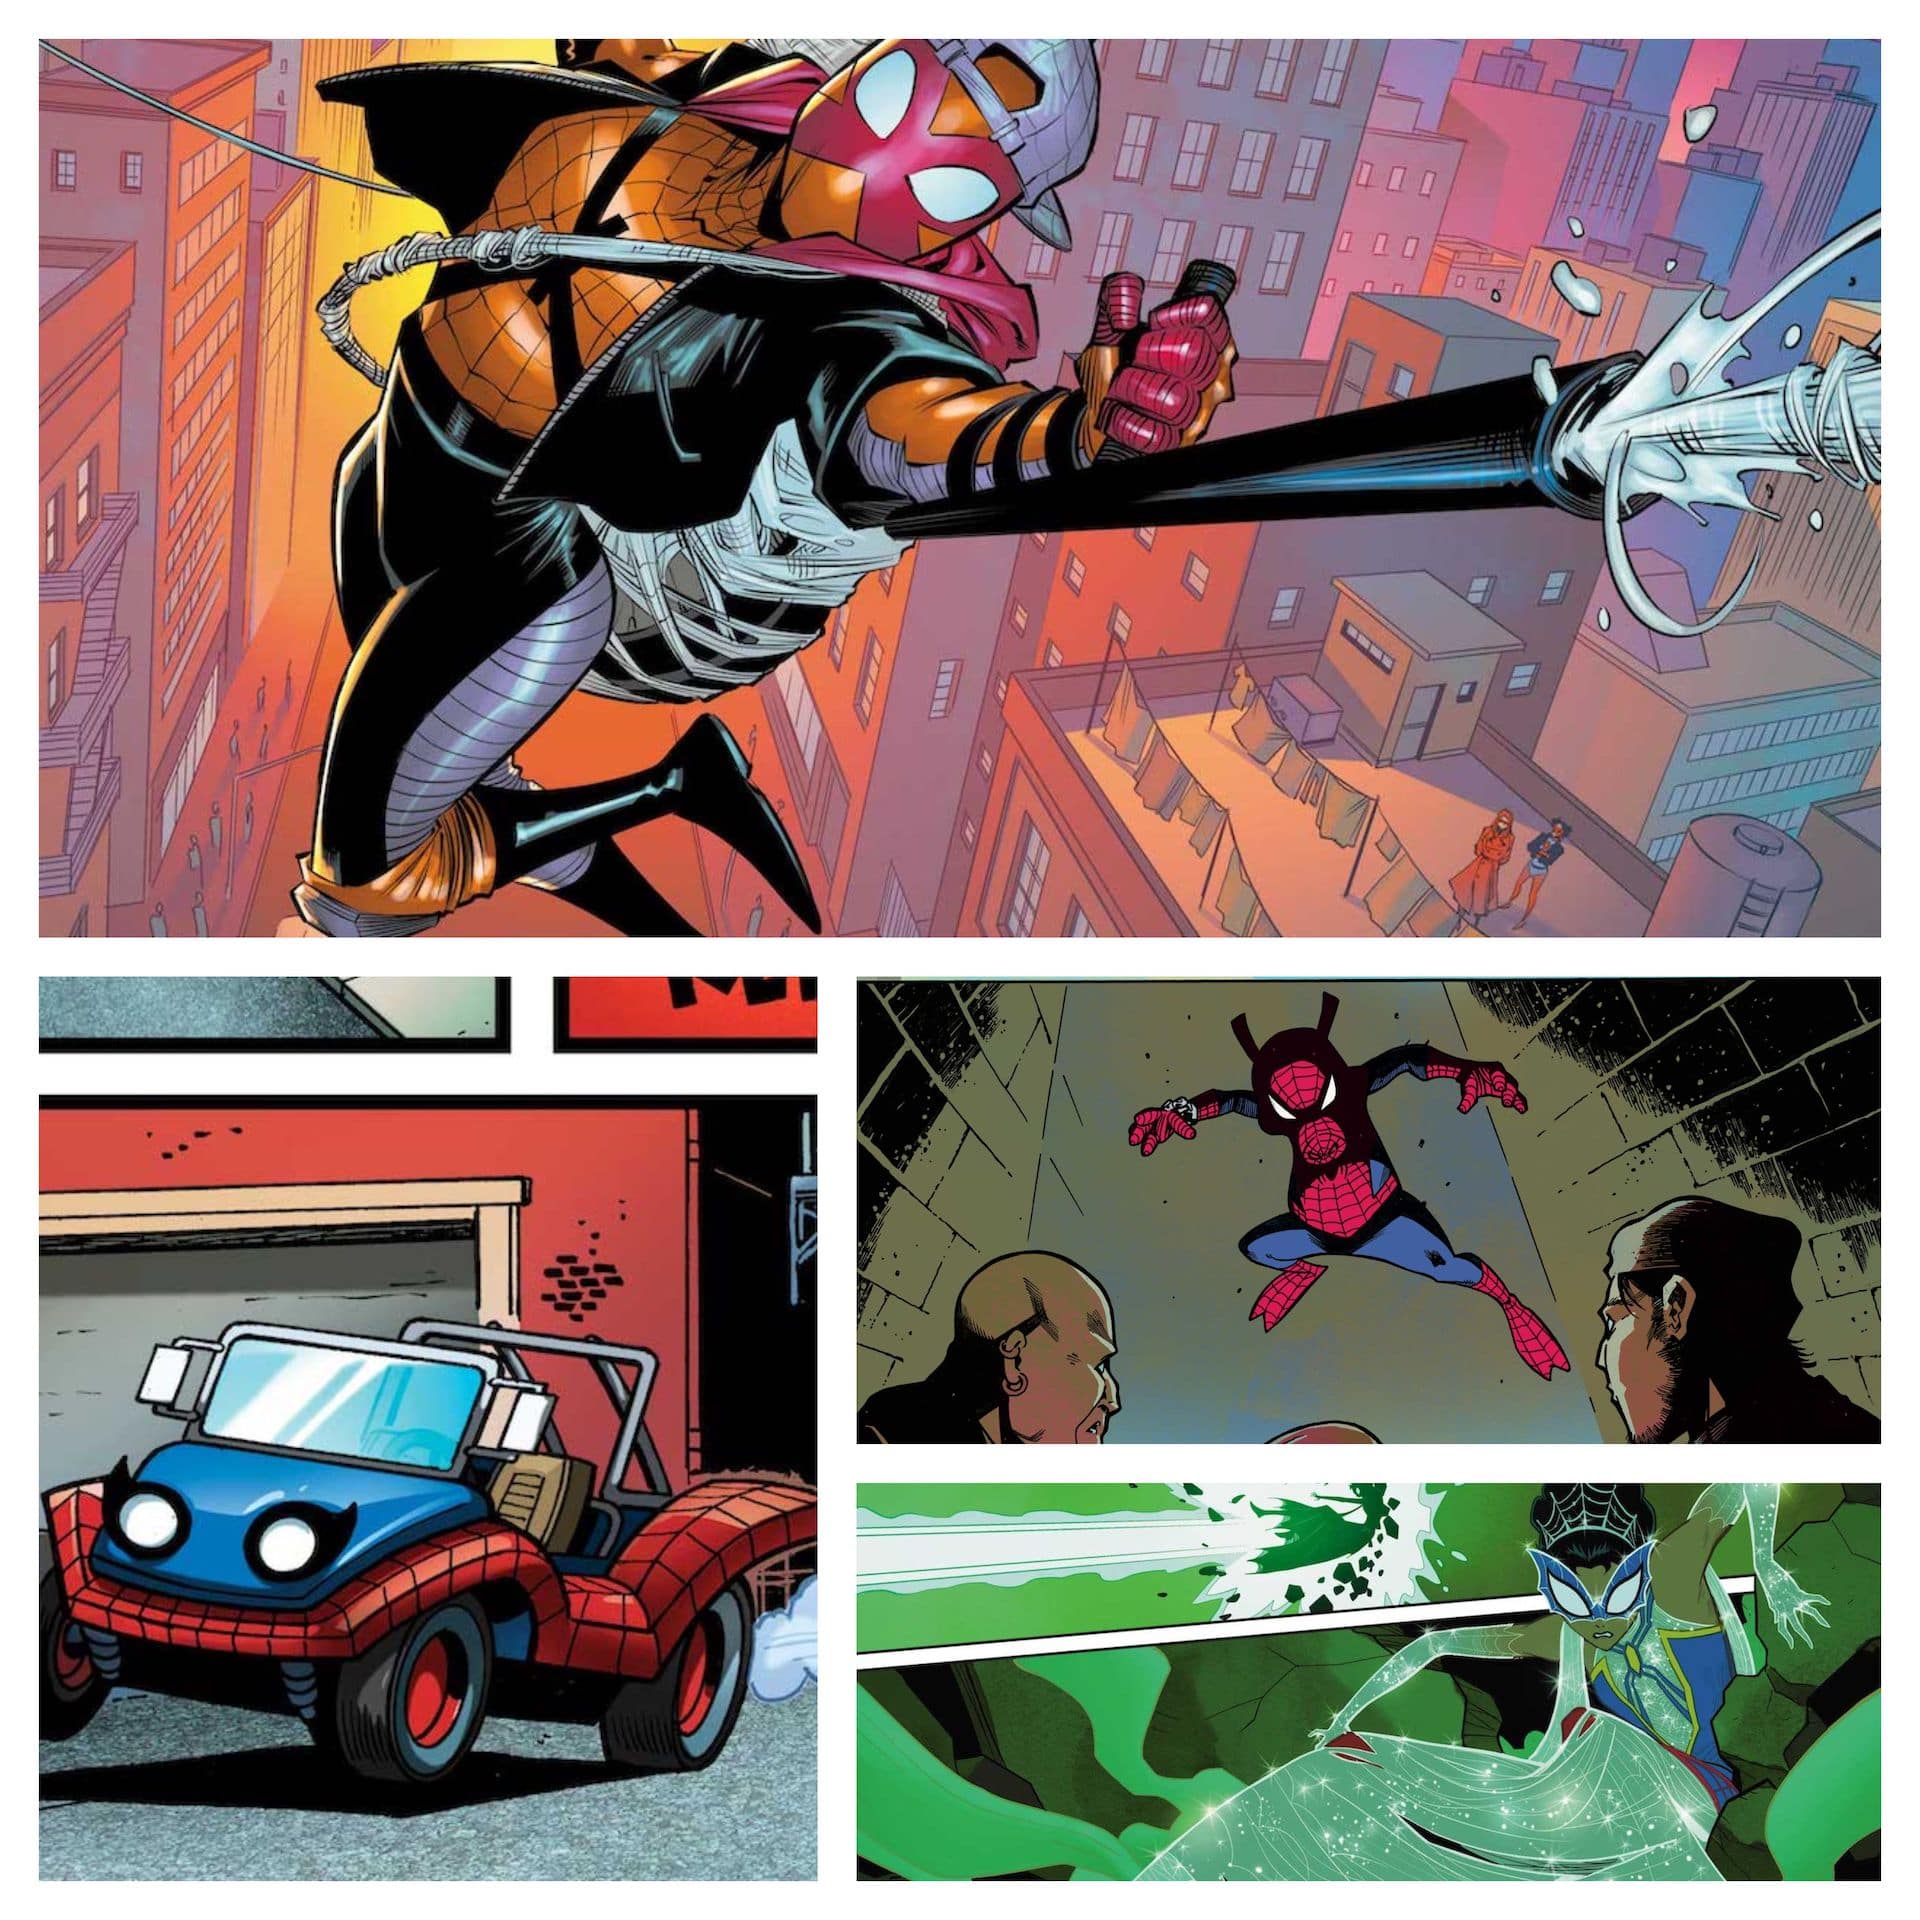 'Edge of Spider-Verse' #4 to feature Spider-Ham, Spinstress, Spider-Mobile, and Sun-Spider